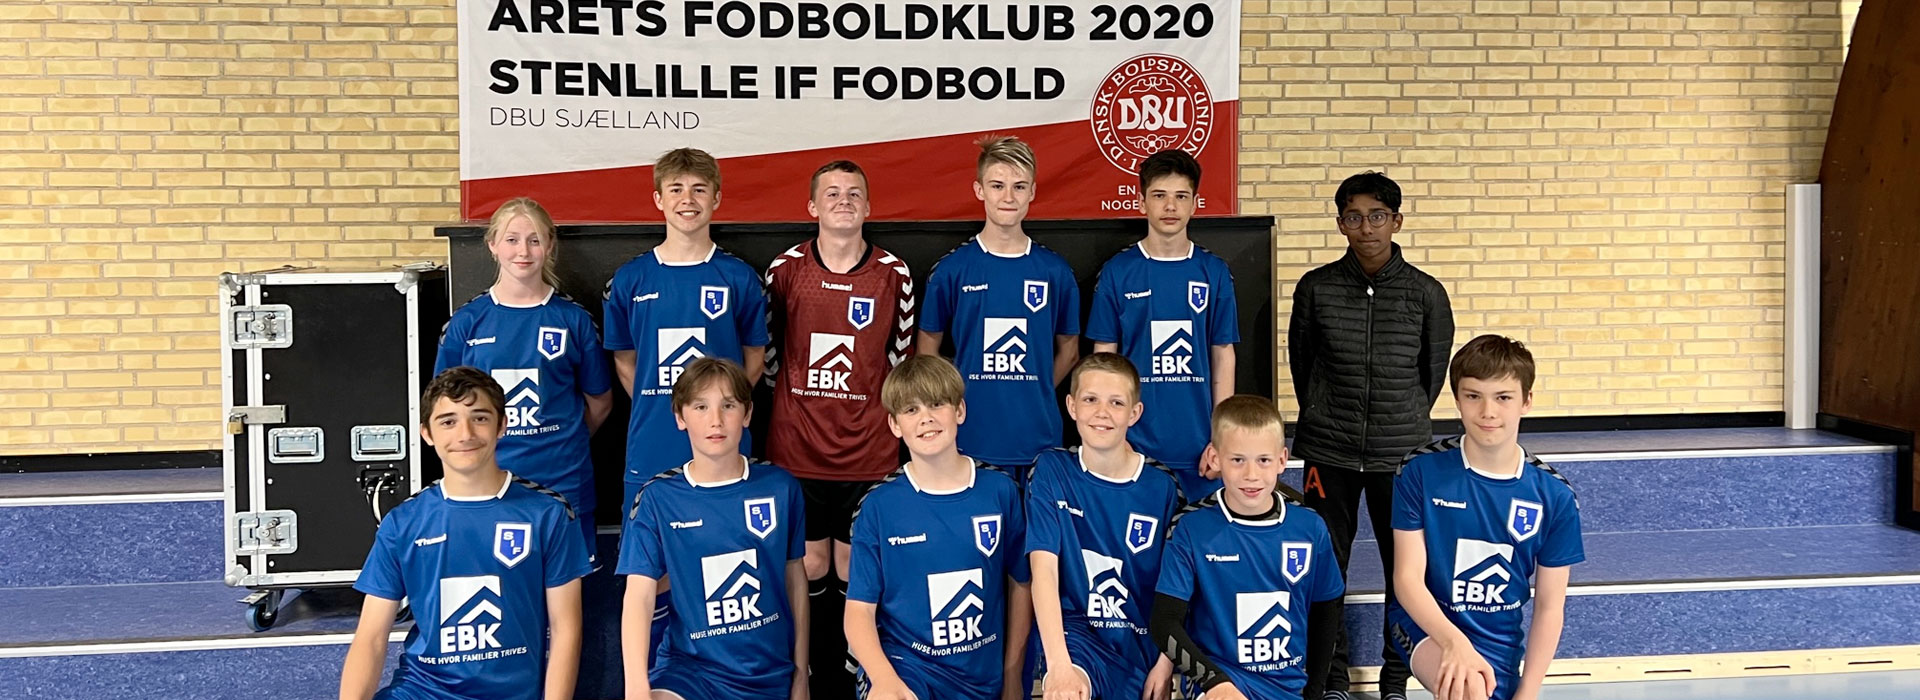 Åøøøøørets børneclub Stenlille IF Fodboldklub